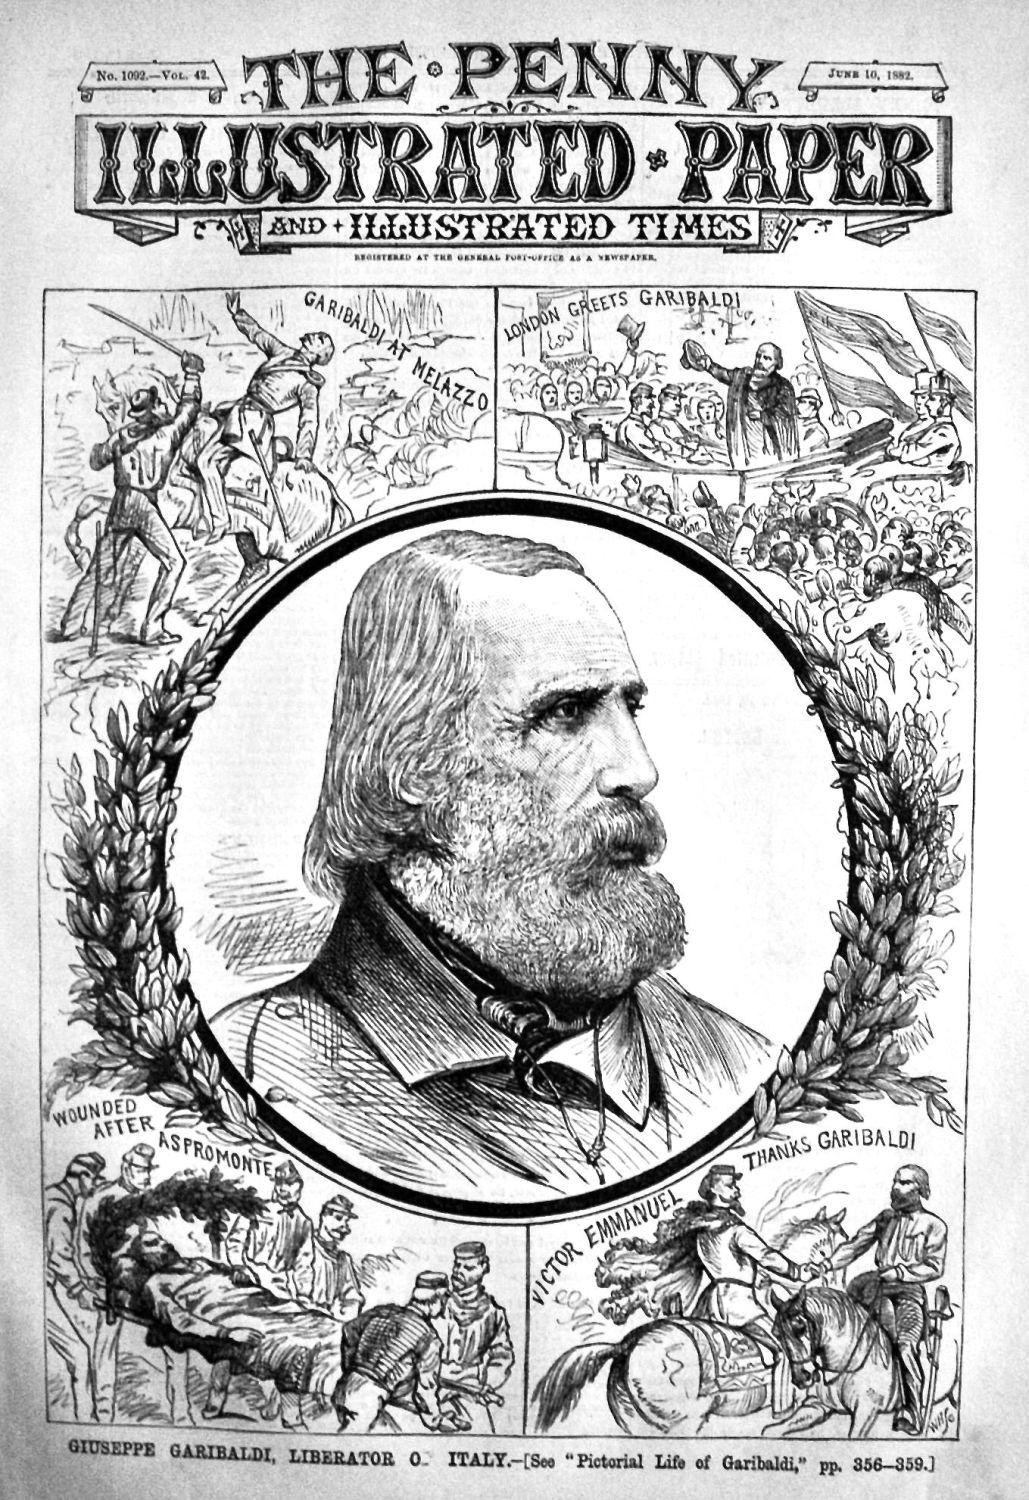 Giuseppe Garibaldi, Liberator Of Italy. 1882.